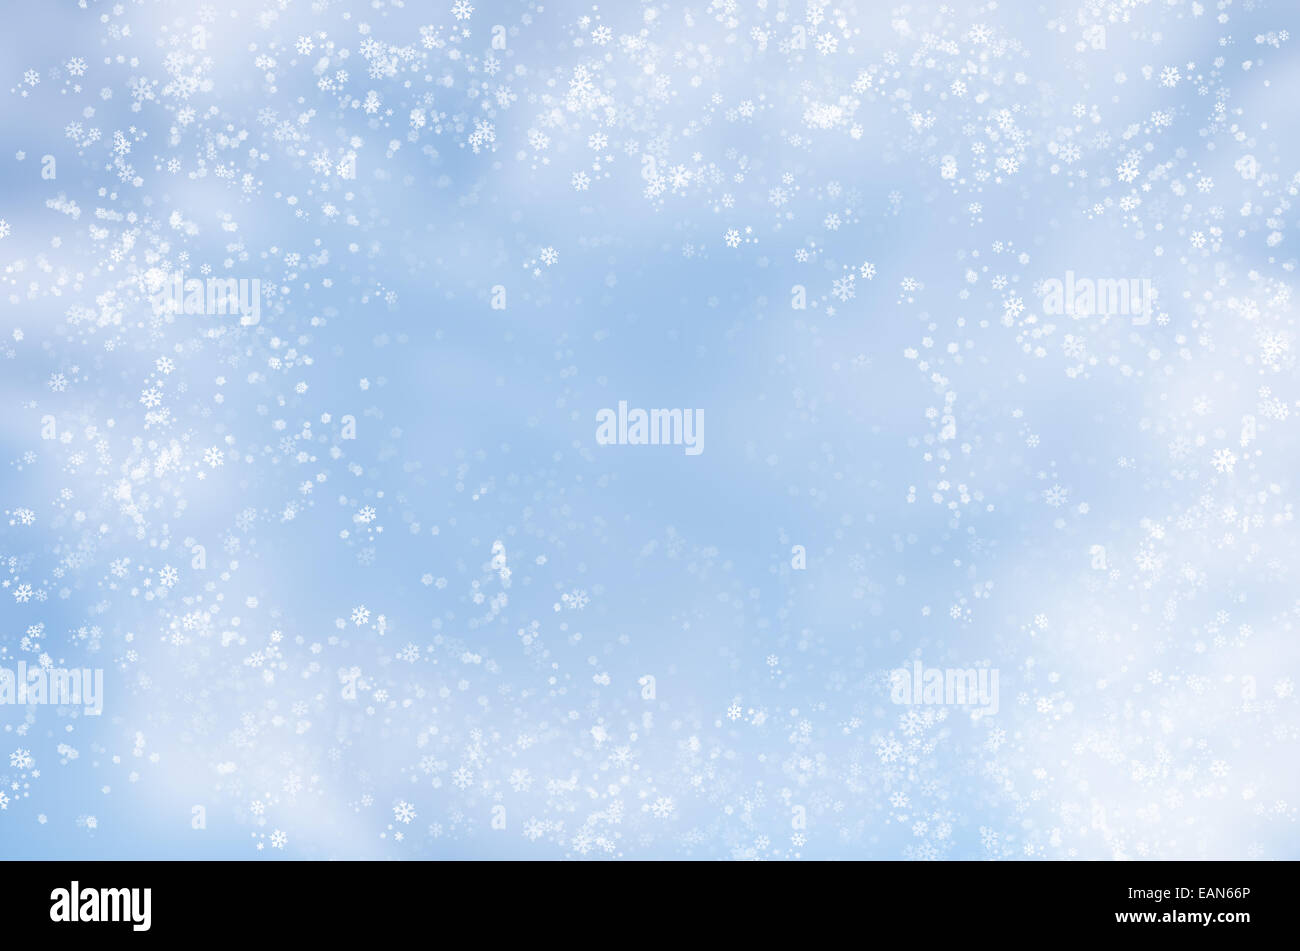 Falling snowflakes on  blue background Stock Photo